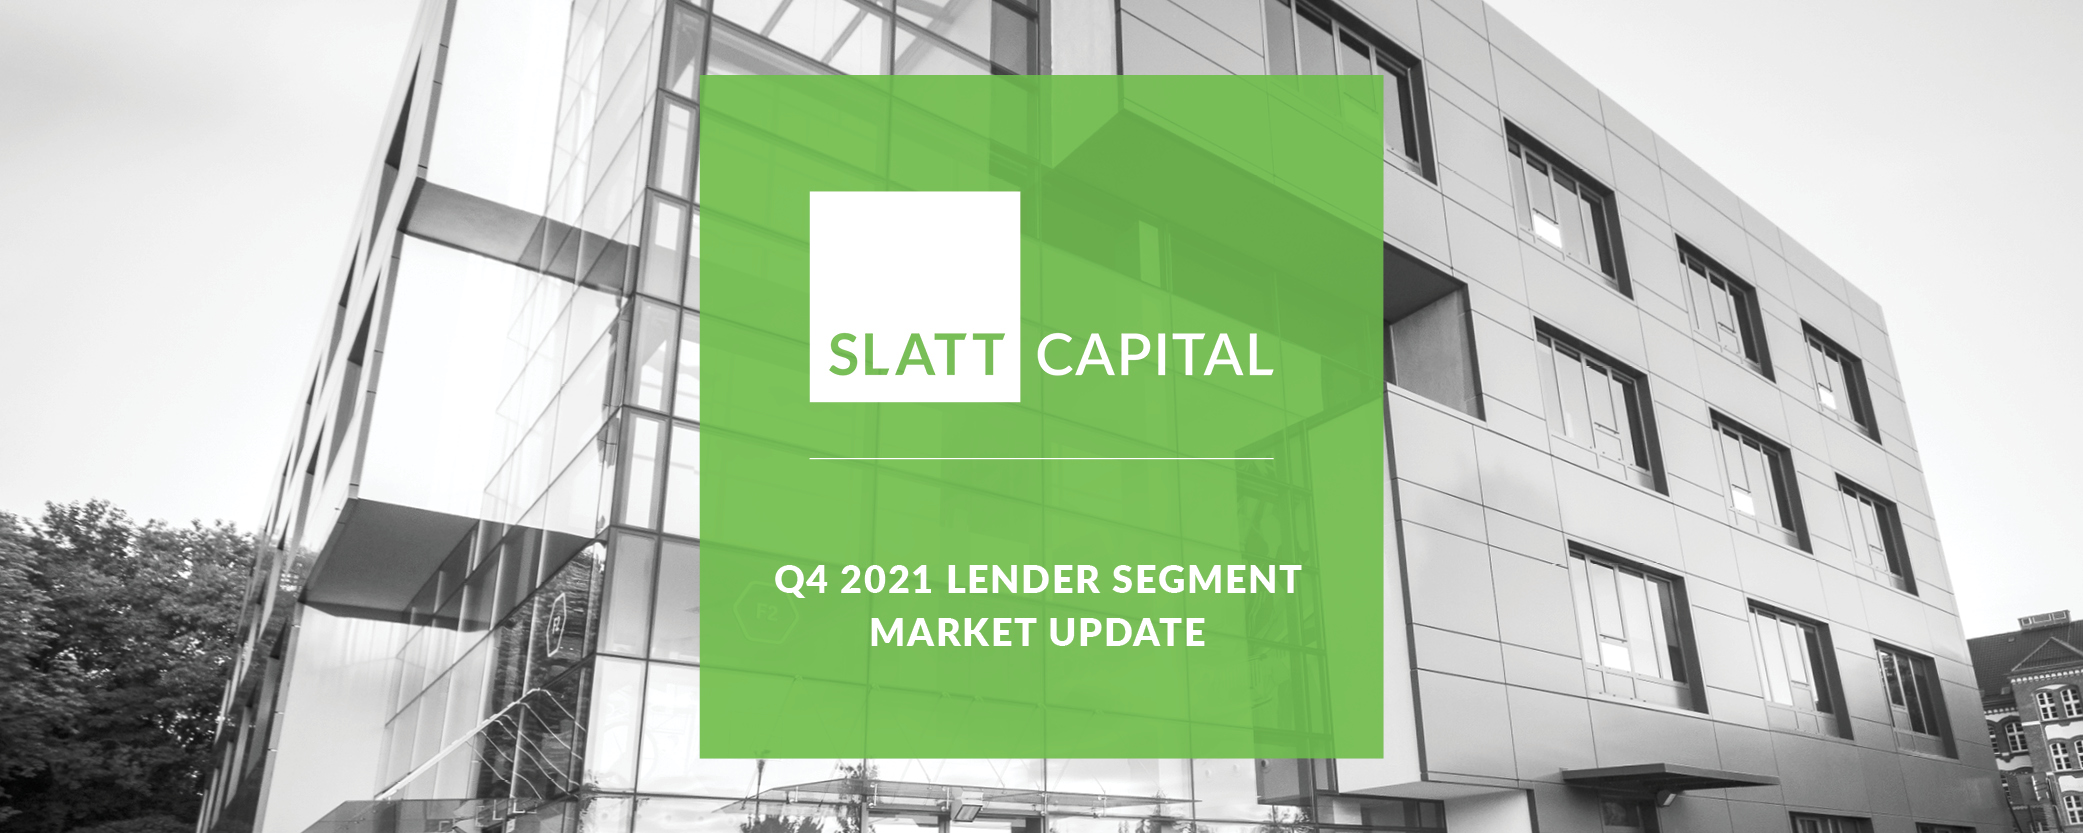 Q4 2021 Lender Segment Market Update